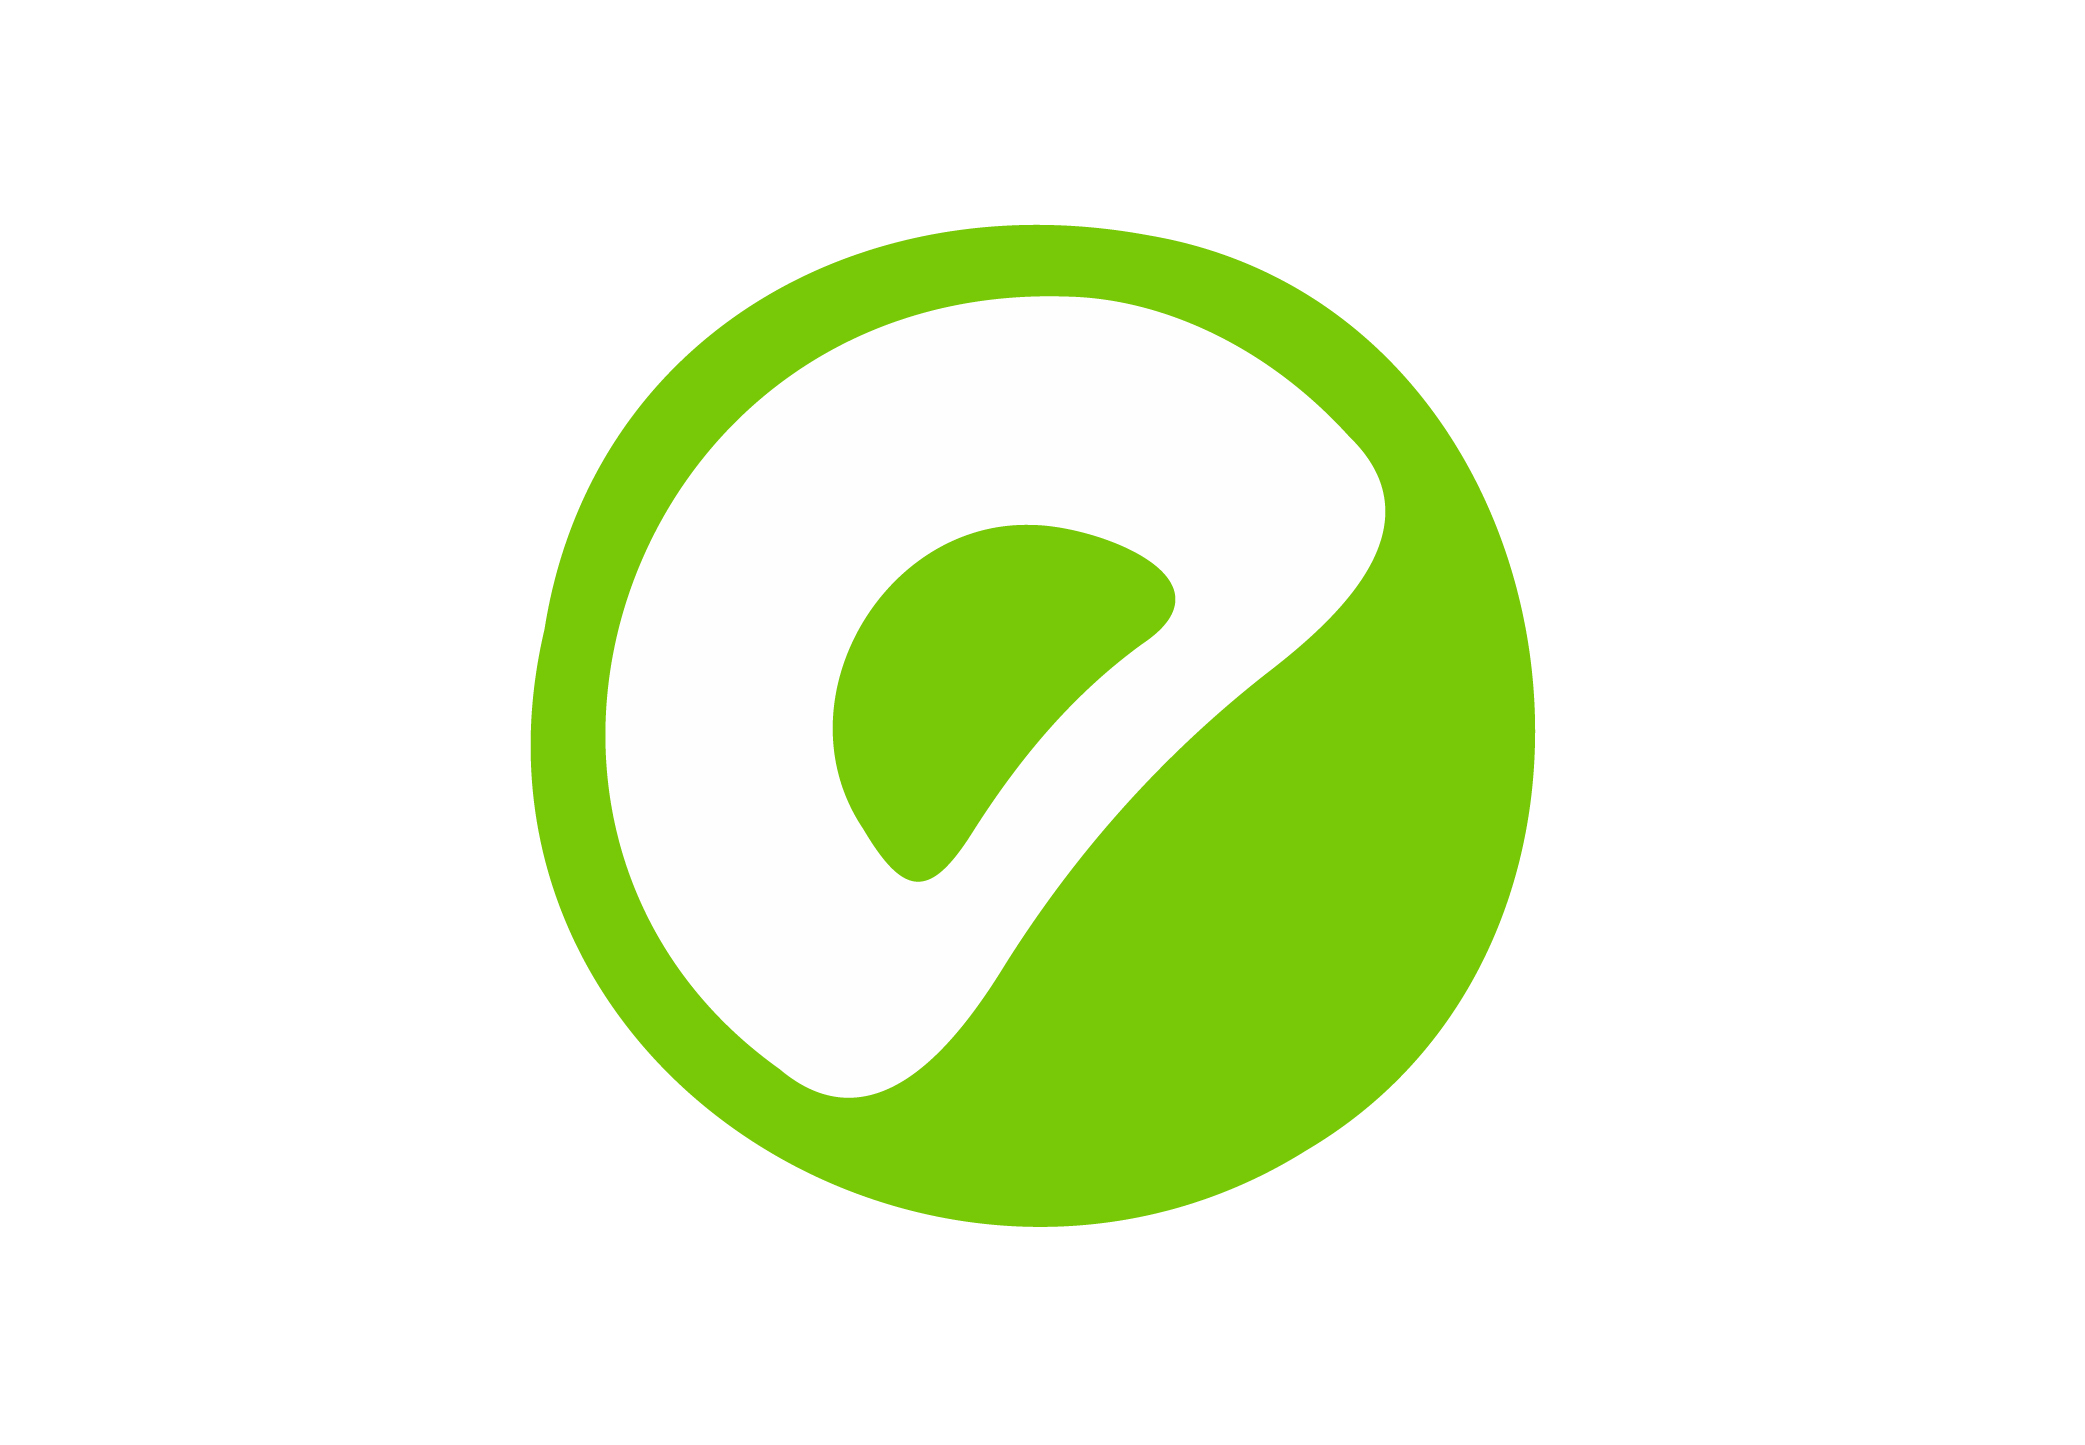 Greenplum logo